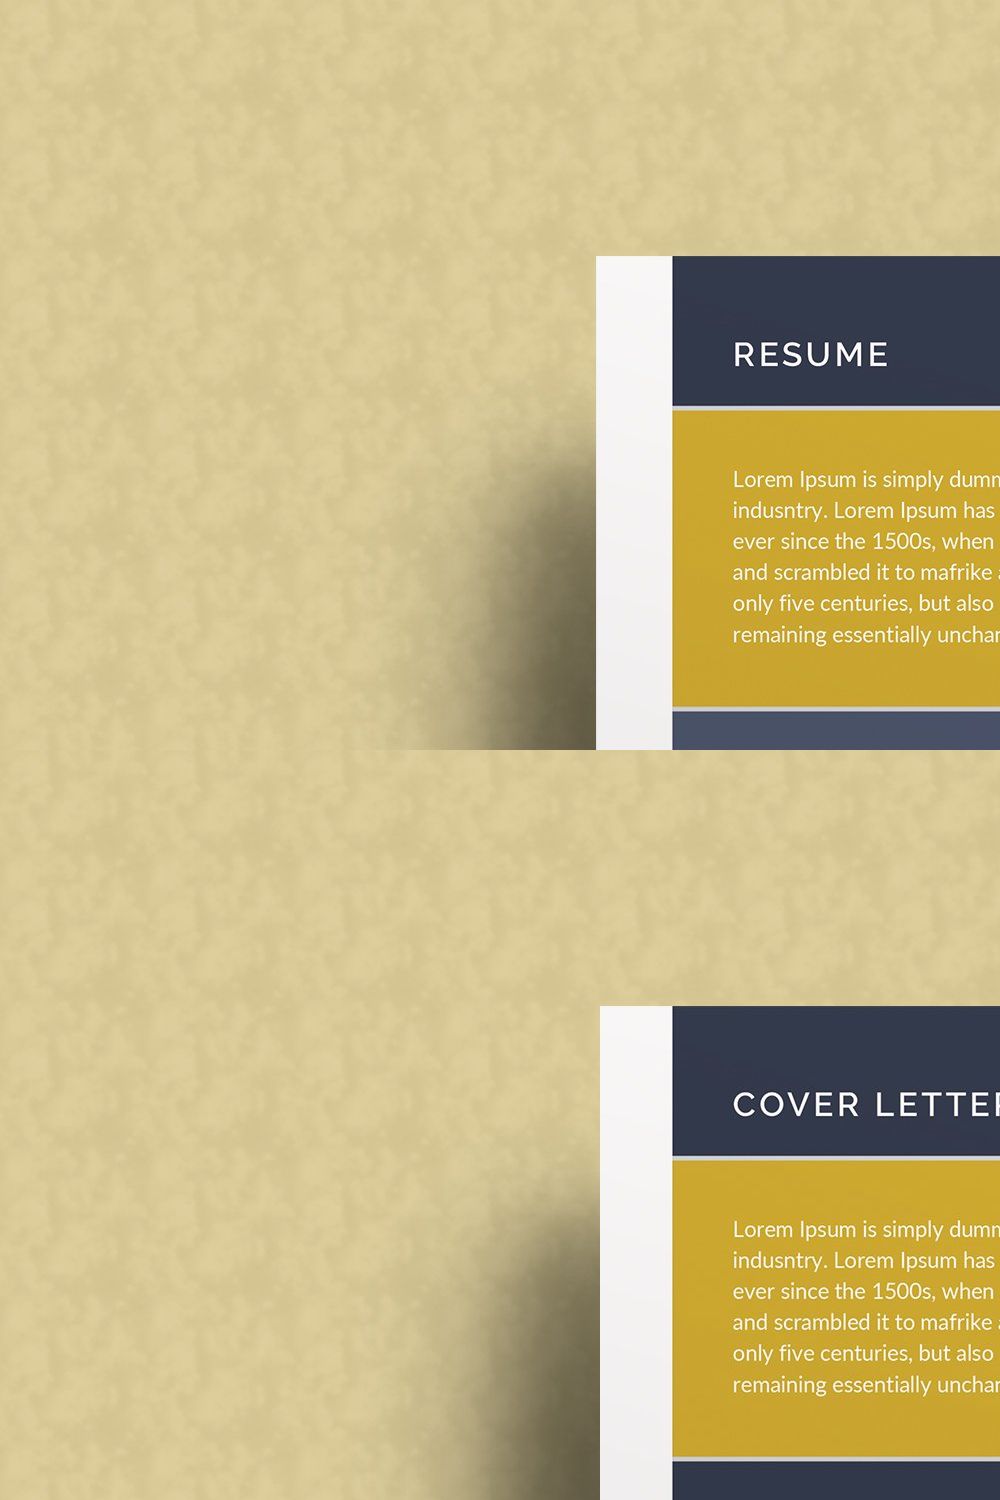 Resume/CV Word pinterest preview image.